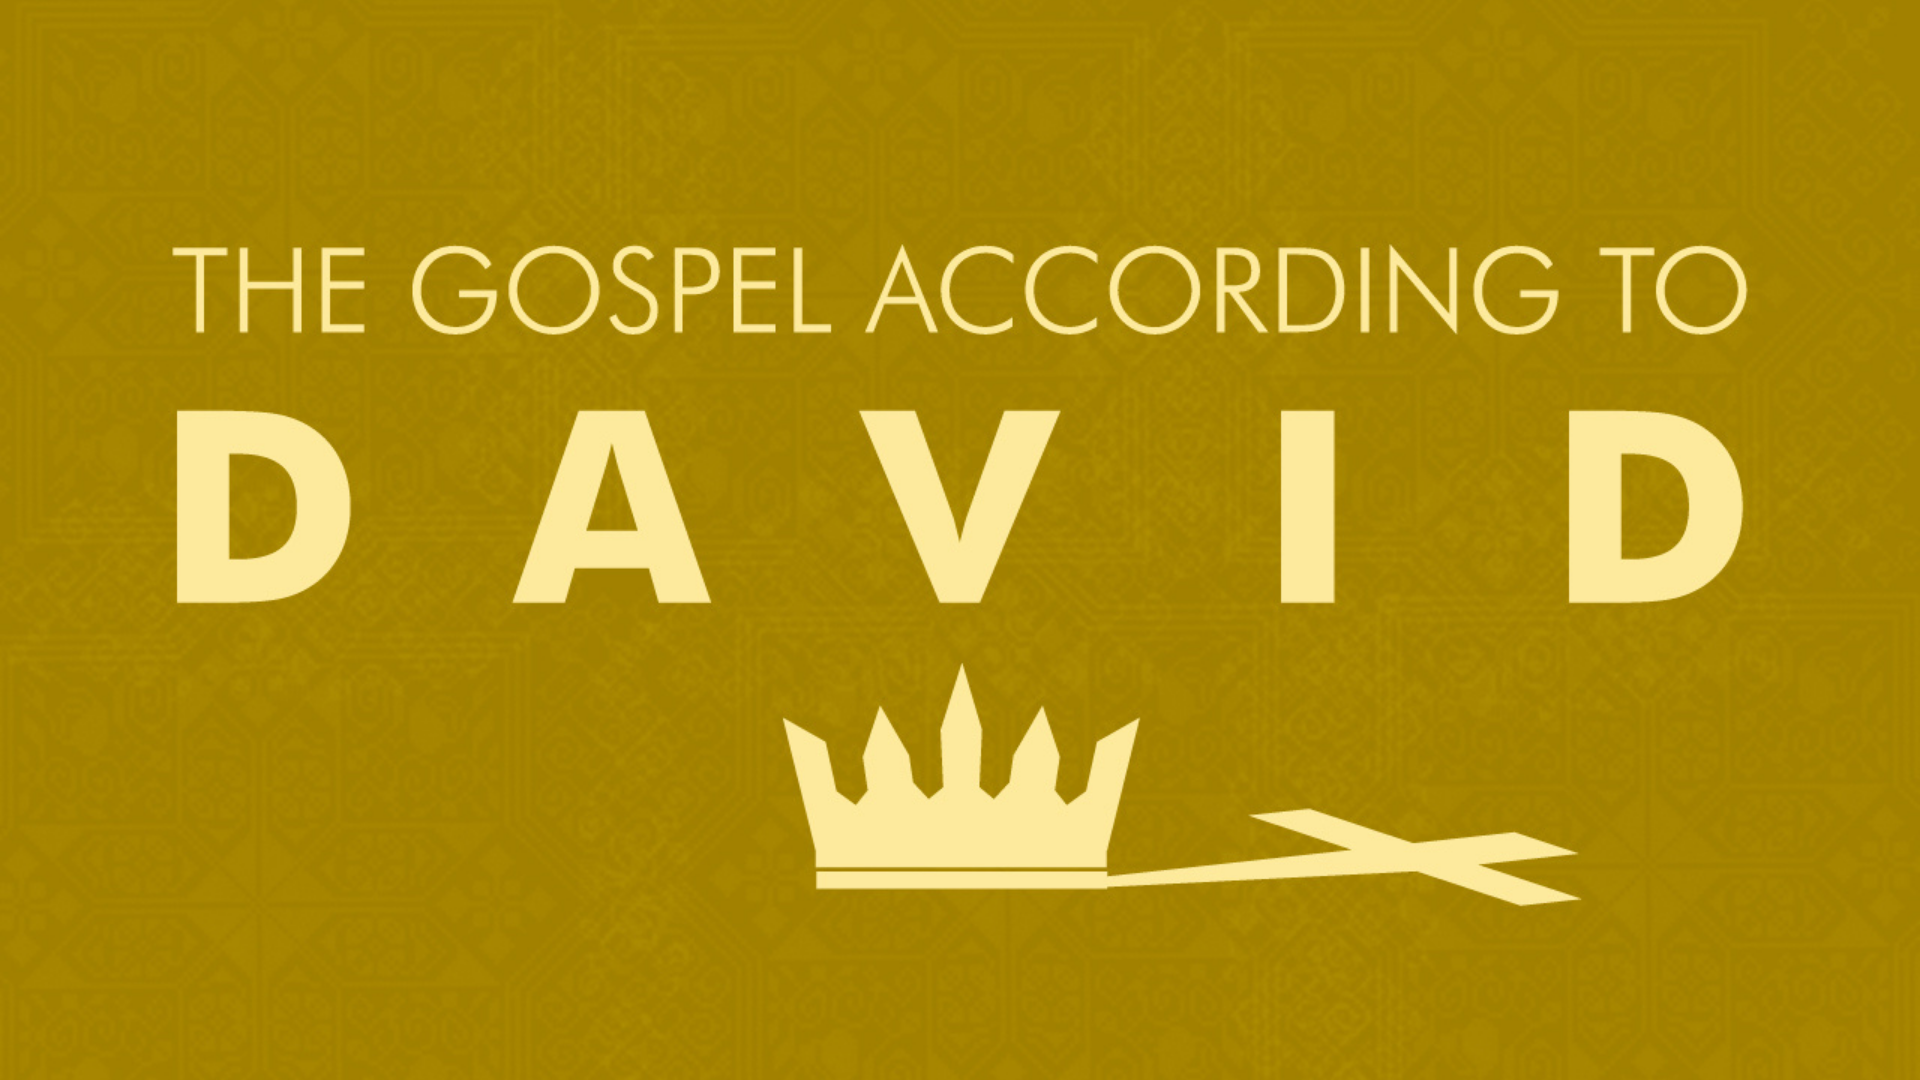 The Gospel According to David